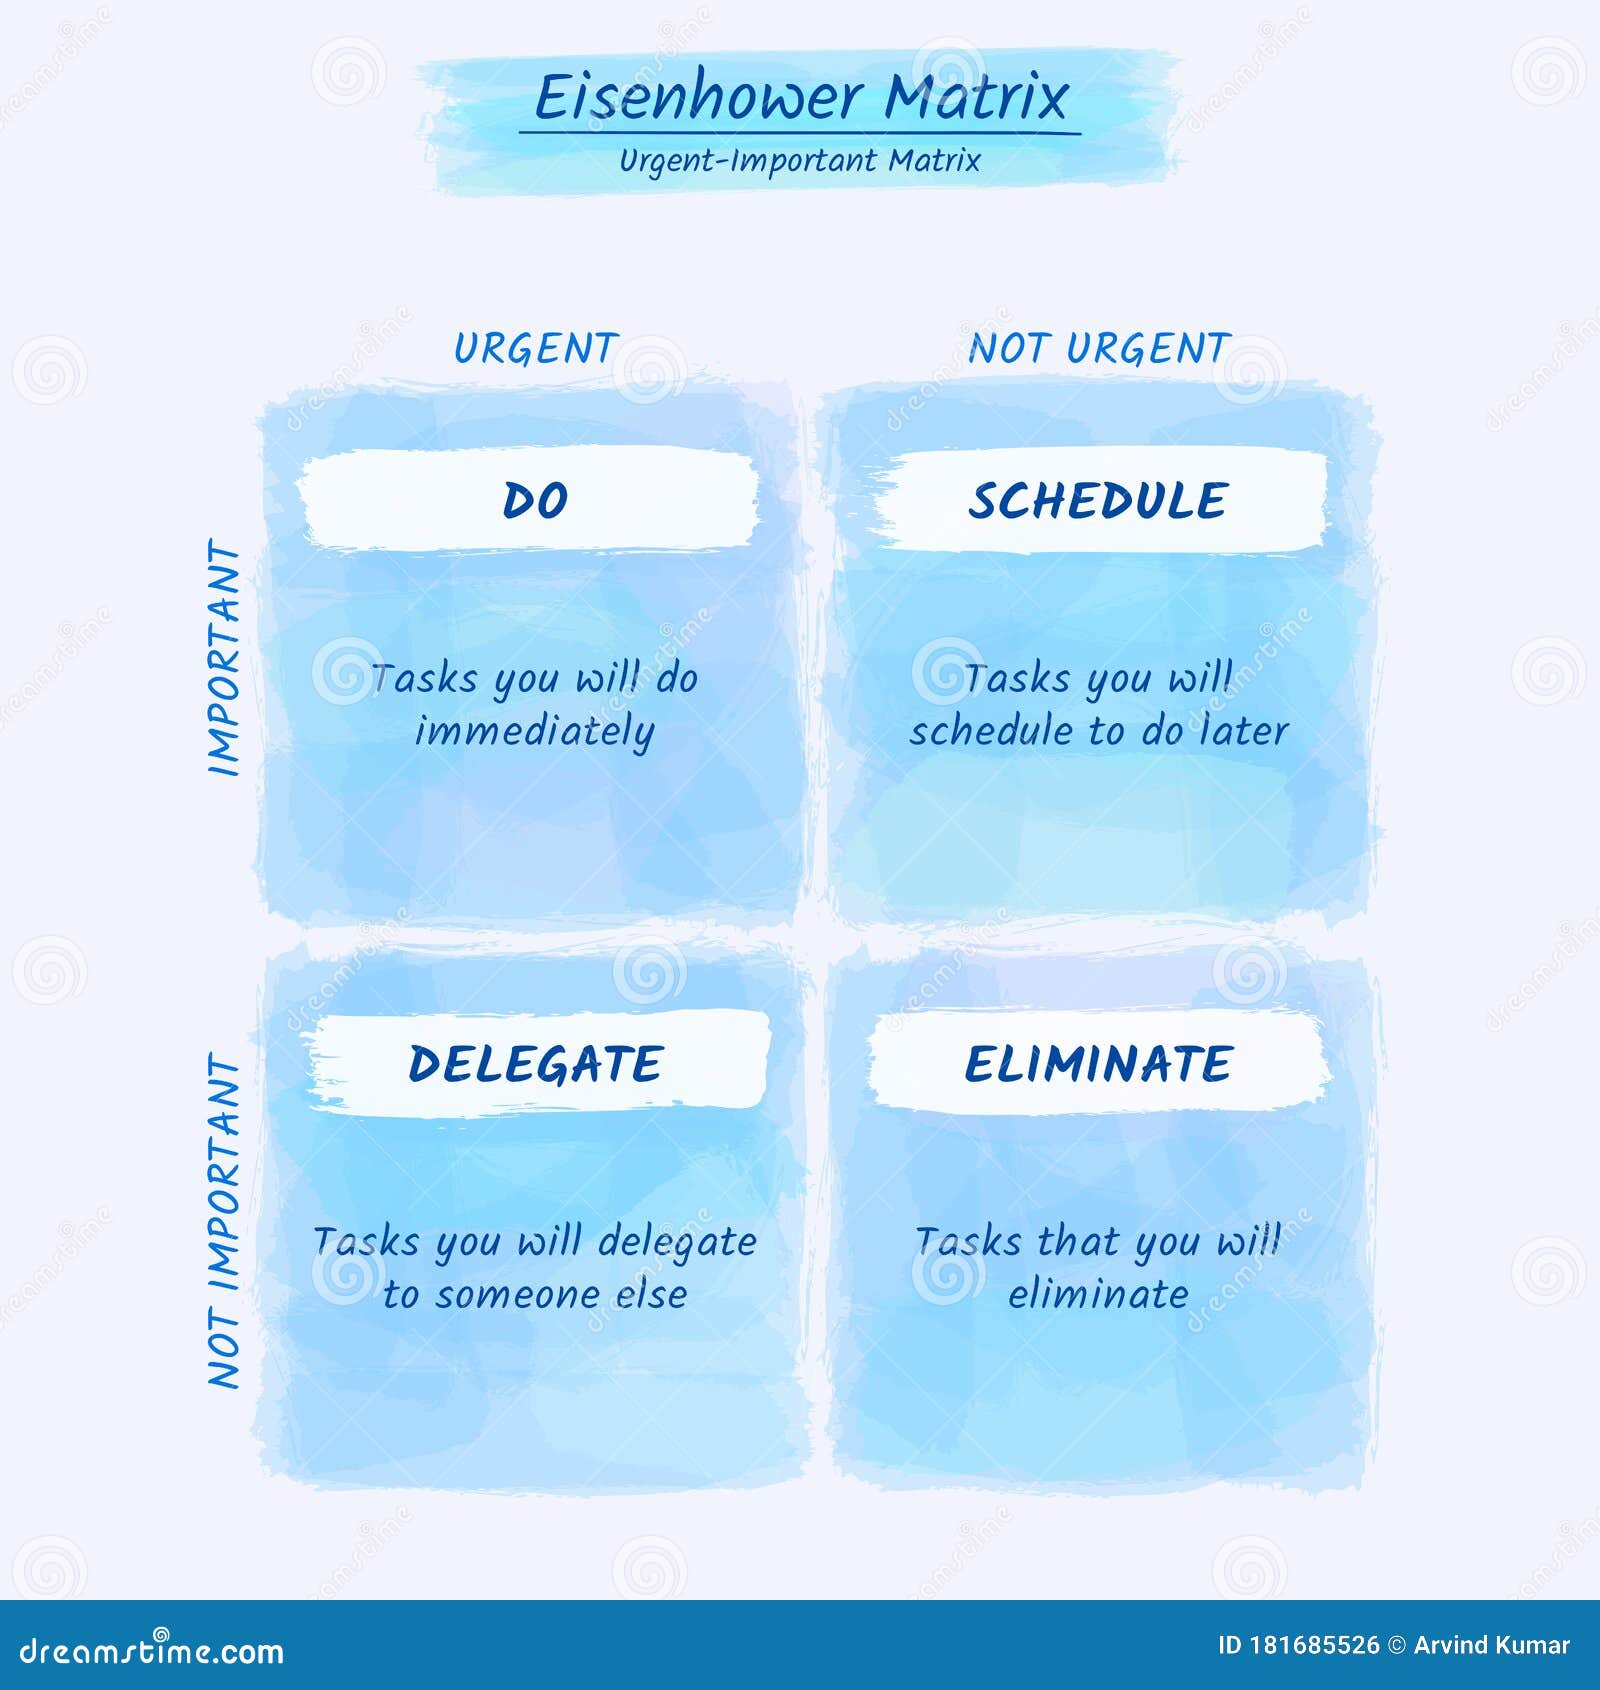 eisenhower matrix water color style, urgent important matrix, prioritize task, task management, project management